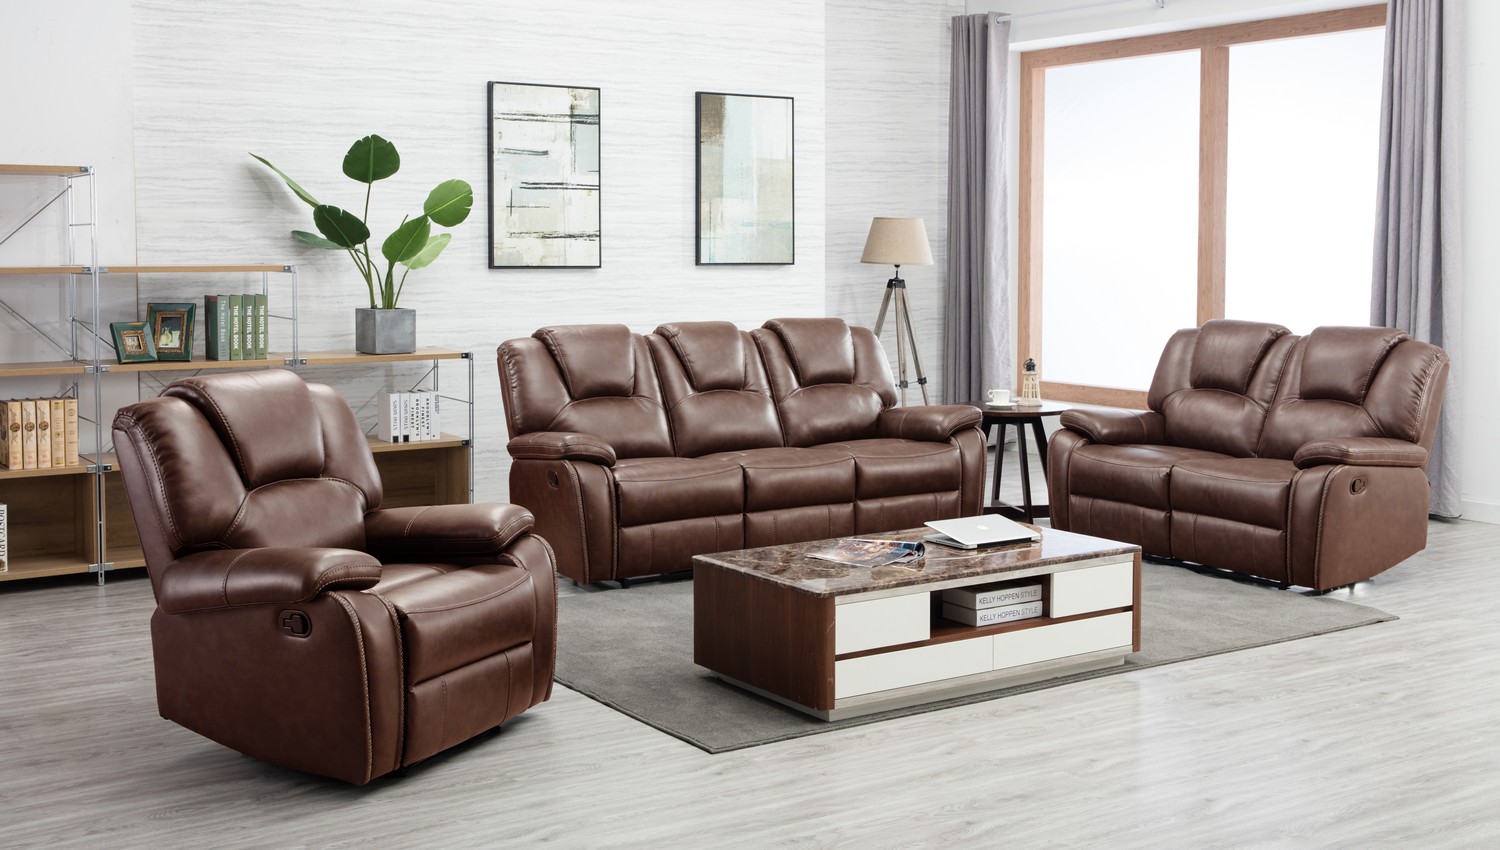 84" X 38" X 40" Modern Brown Leather Sofa Set